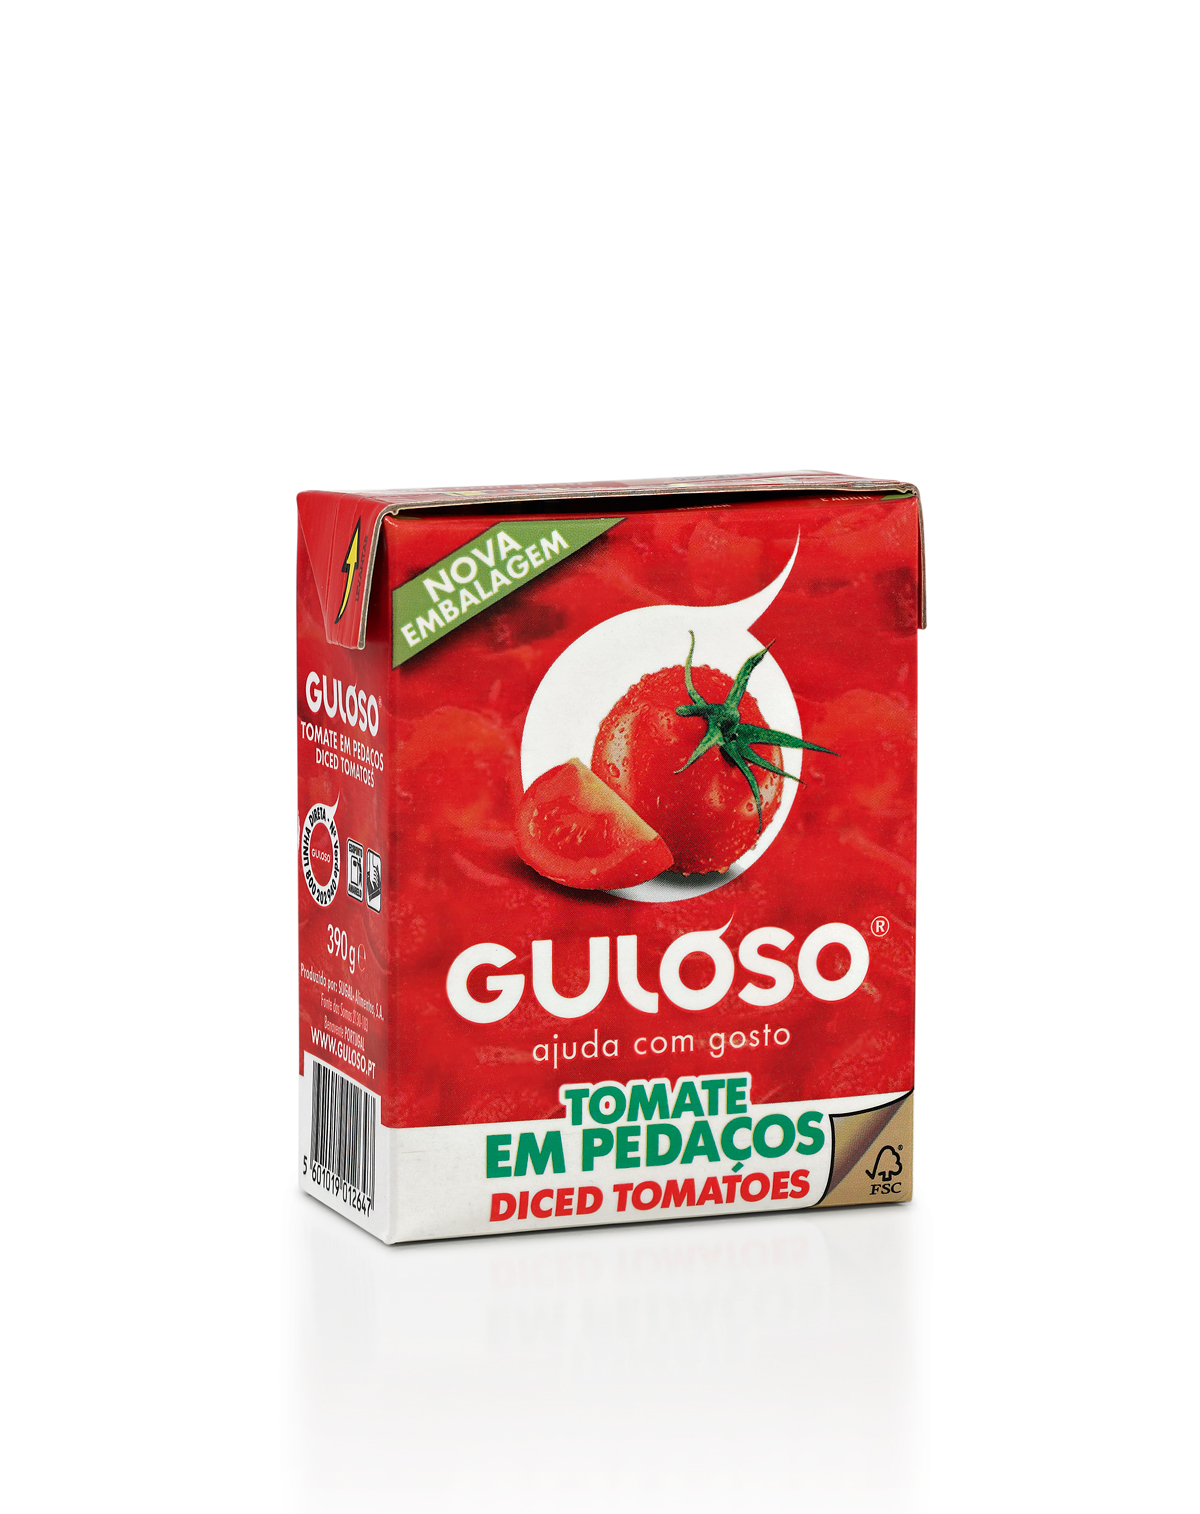 Samuel Botsing periscoop Europe: Chopped tomatoes in cartons win packaging award - Food News  International